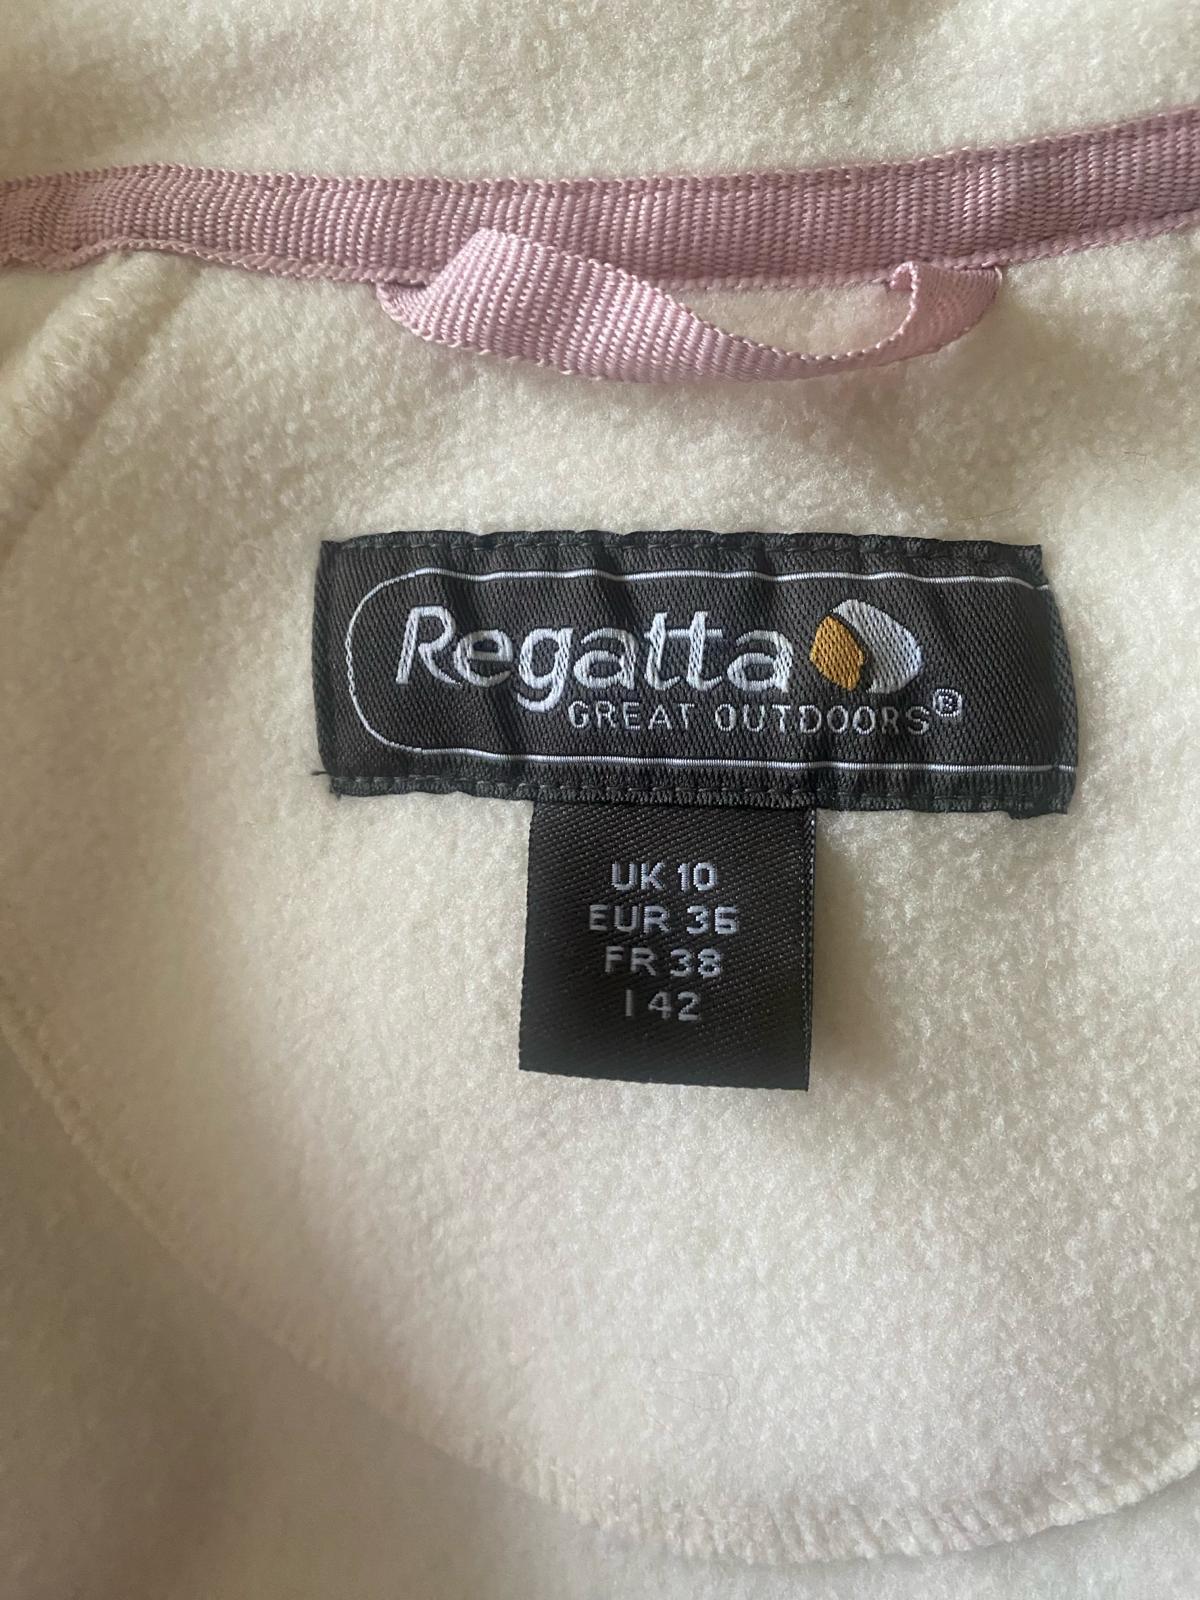 Regatta Cream Fleece - size UK10 - Pre-loved